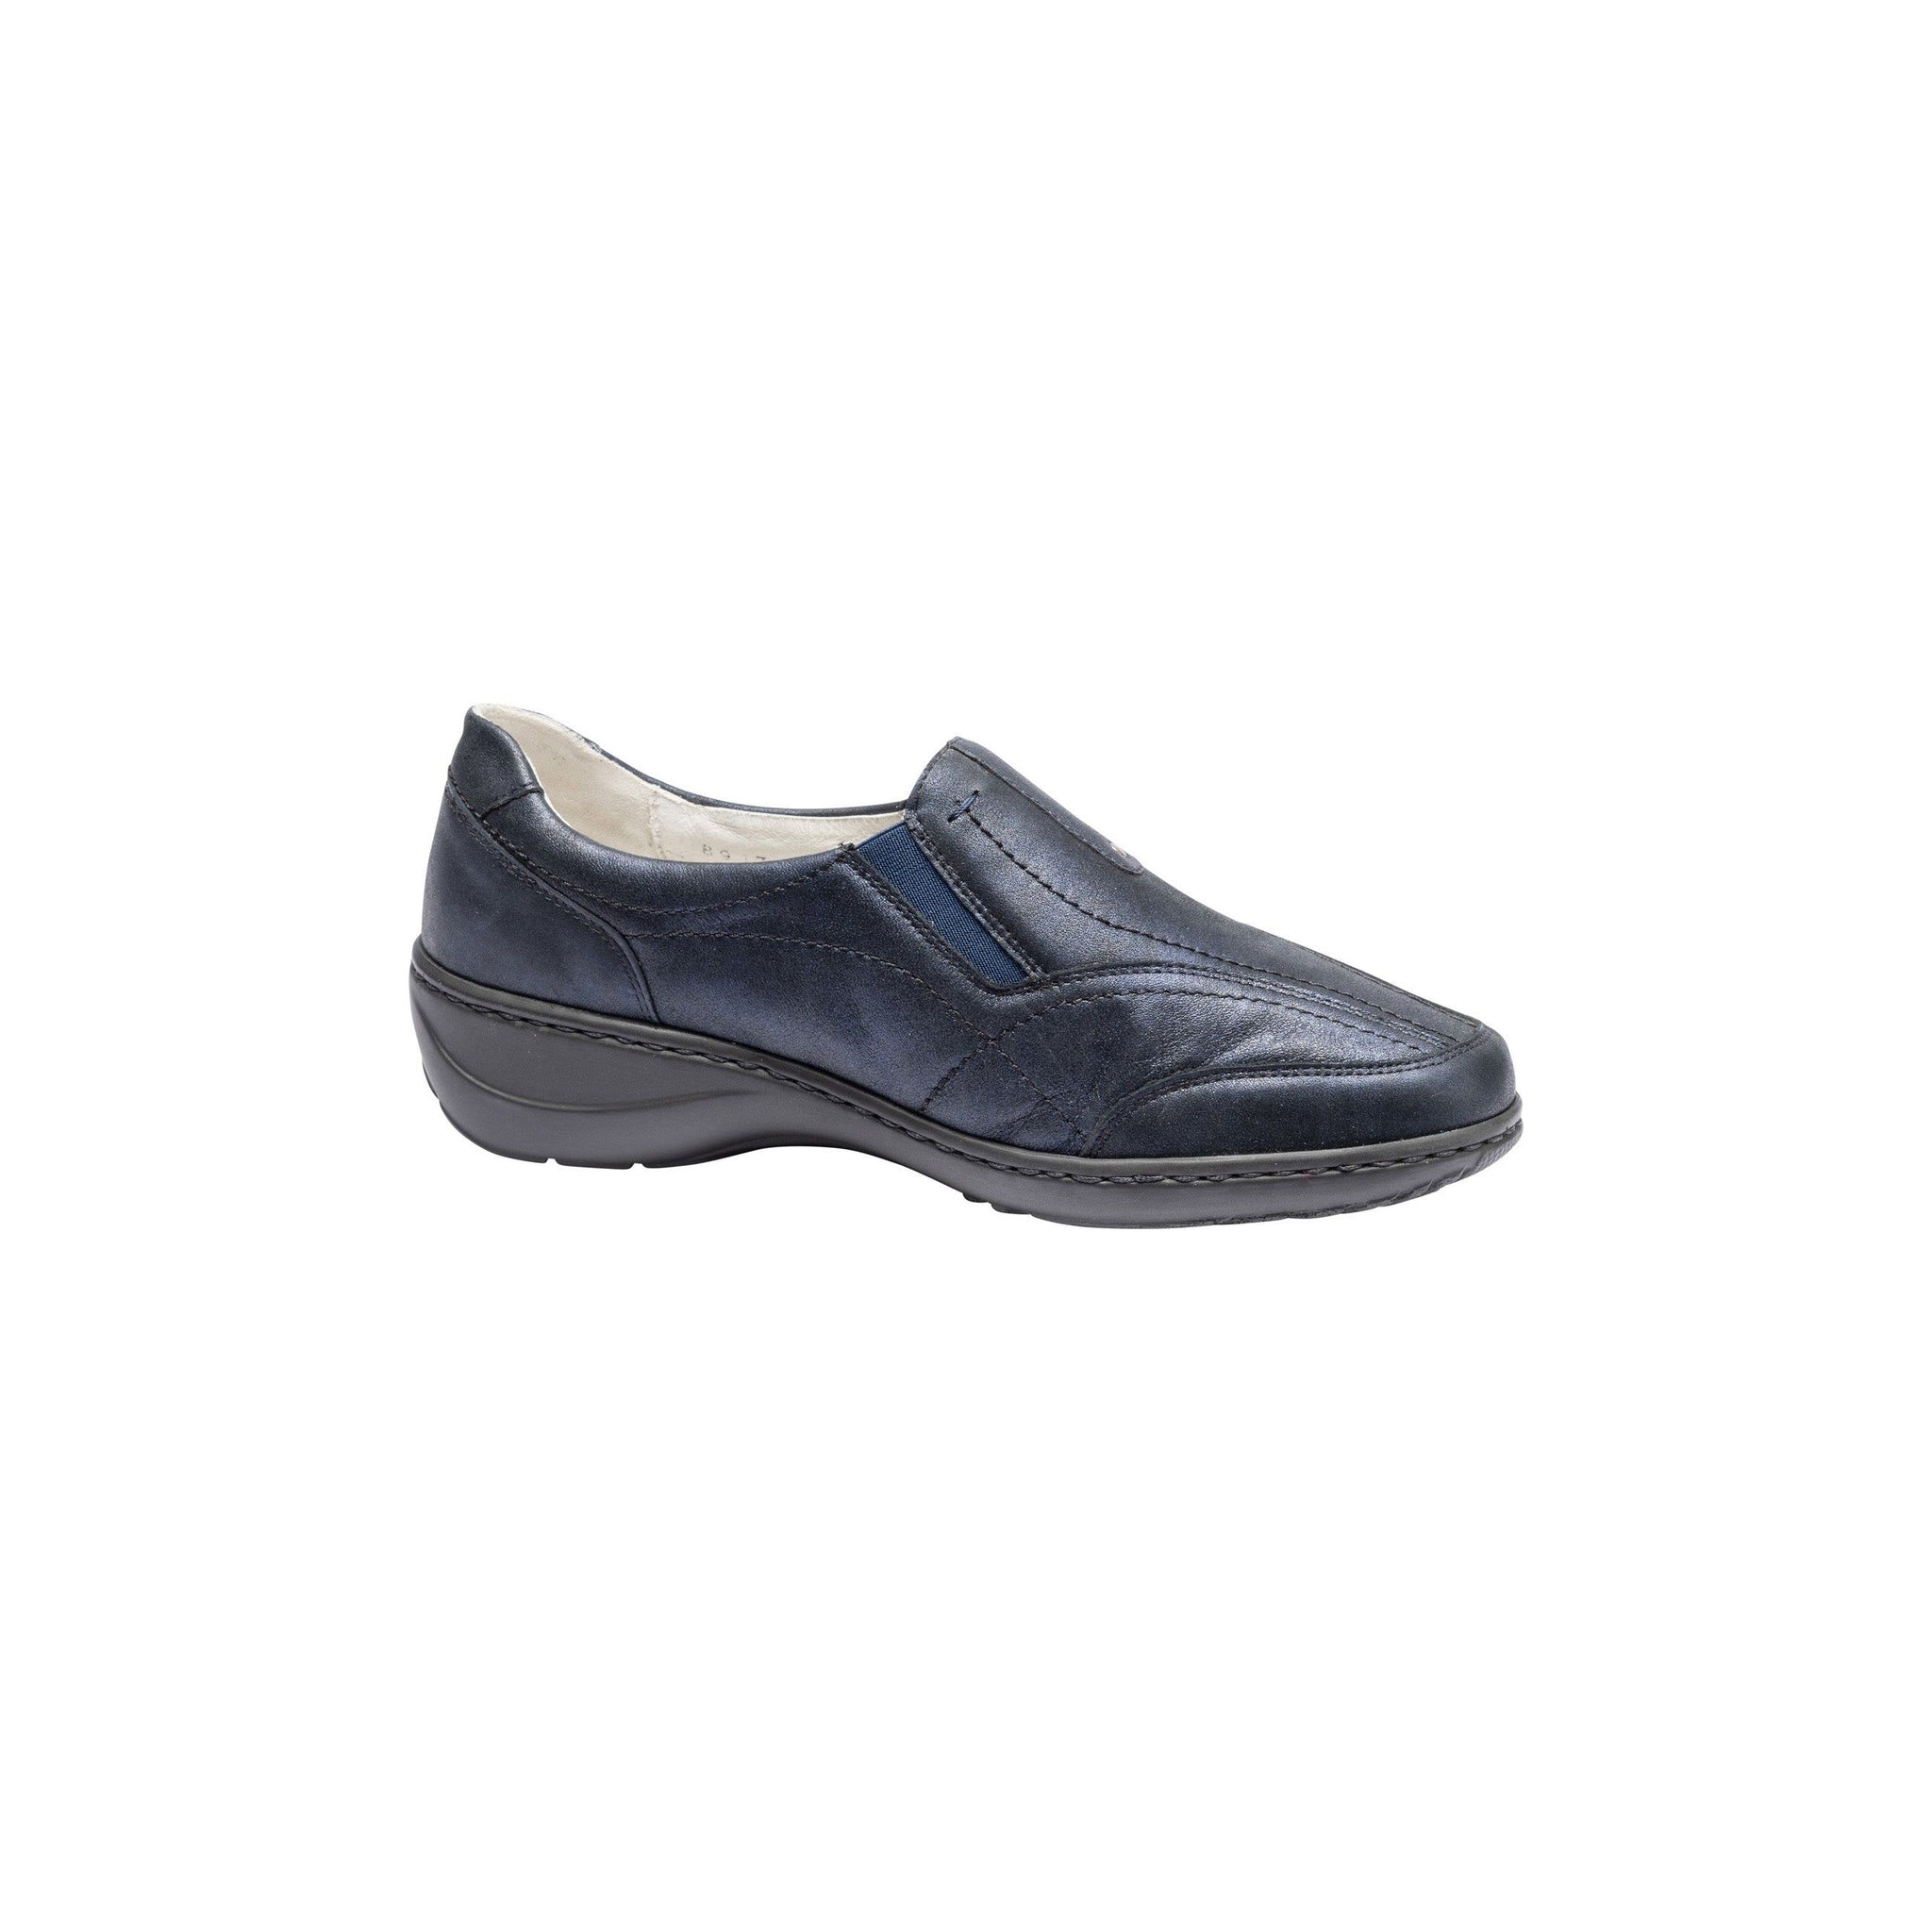 Waldlaufer Kya(607504)- Ladies Extra Wide Fit Slip-On Shoes in Navy  |Waldläufer Shoes | Wide Fit Shoes  Wisemans | Bantry | Shoe Shop | West Cork | Ireland